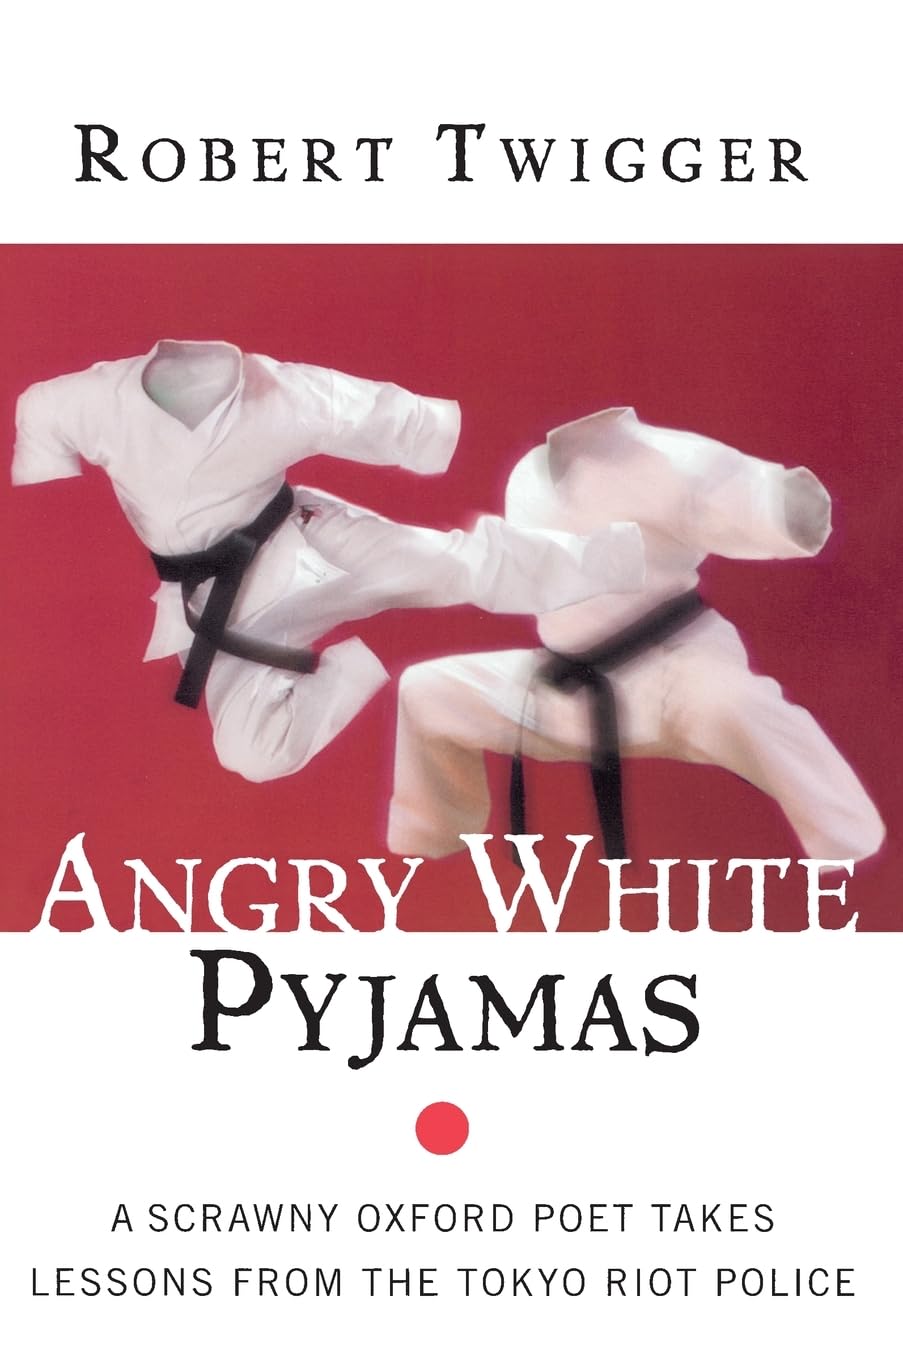 Angry White Pyjamas Book by Robert Twigger